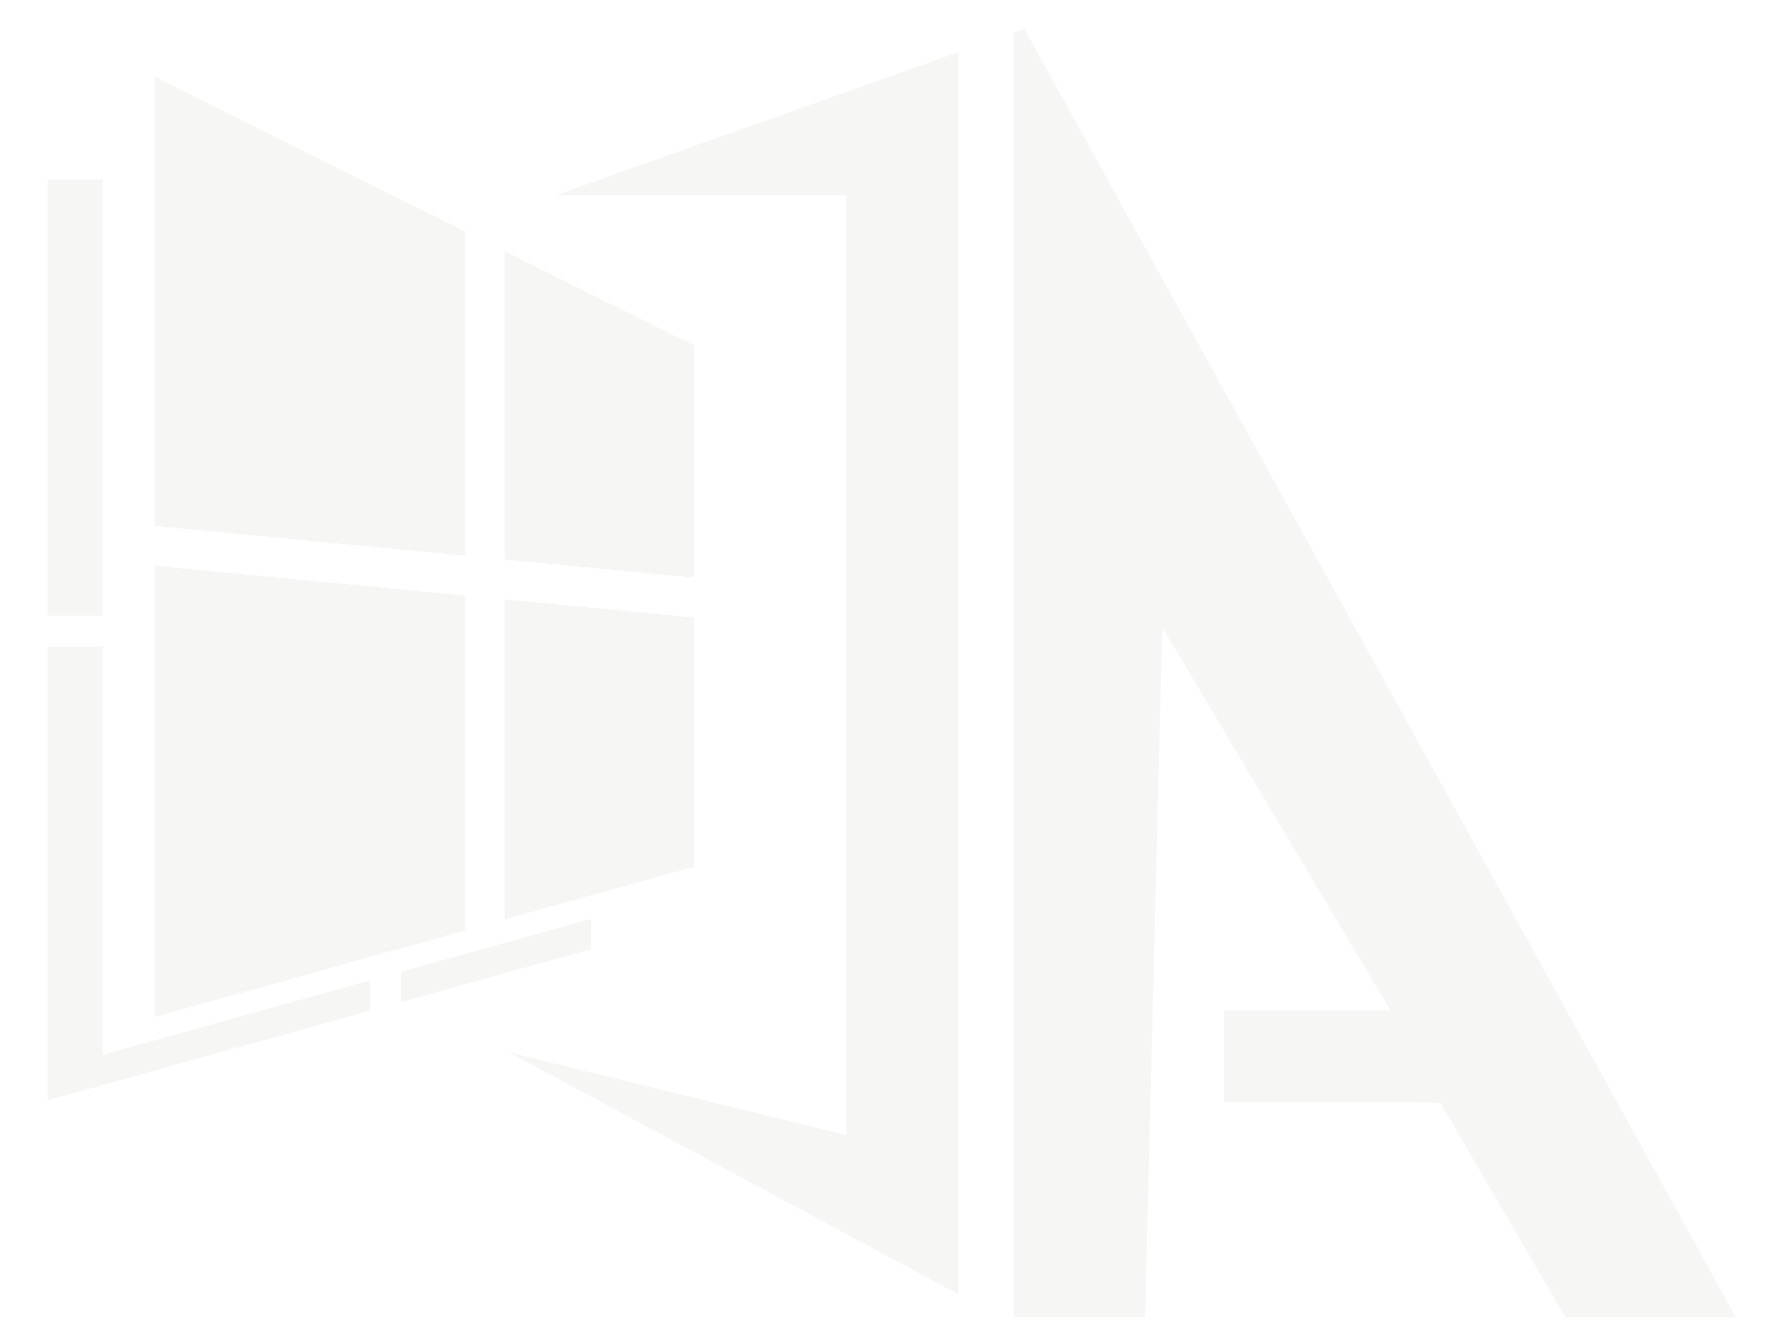 Logotipo Alumun en blanco